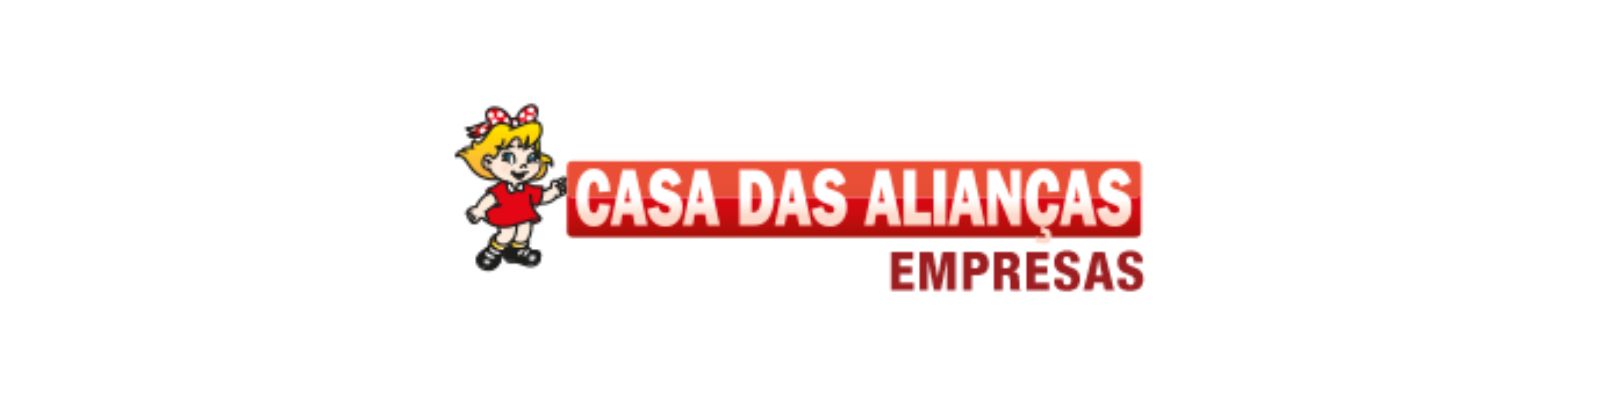 WhatsApp Casa das Alianças: SAC, Chat, E-mail, Ouvidoria!